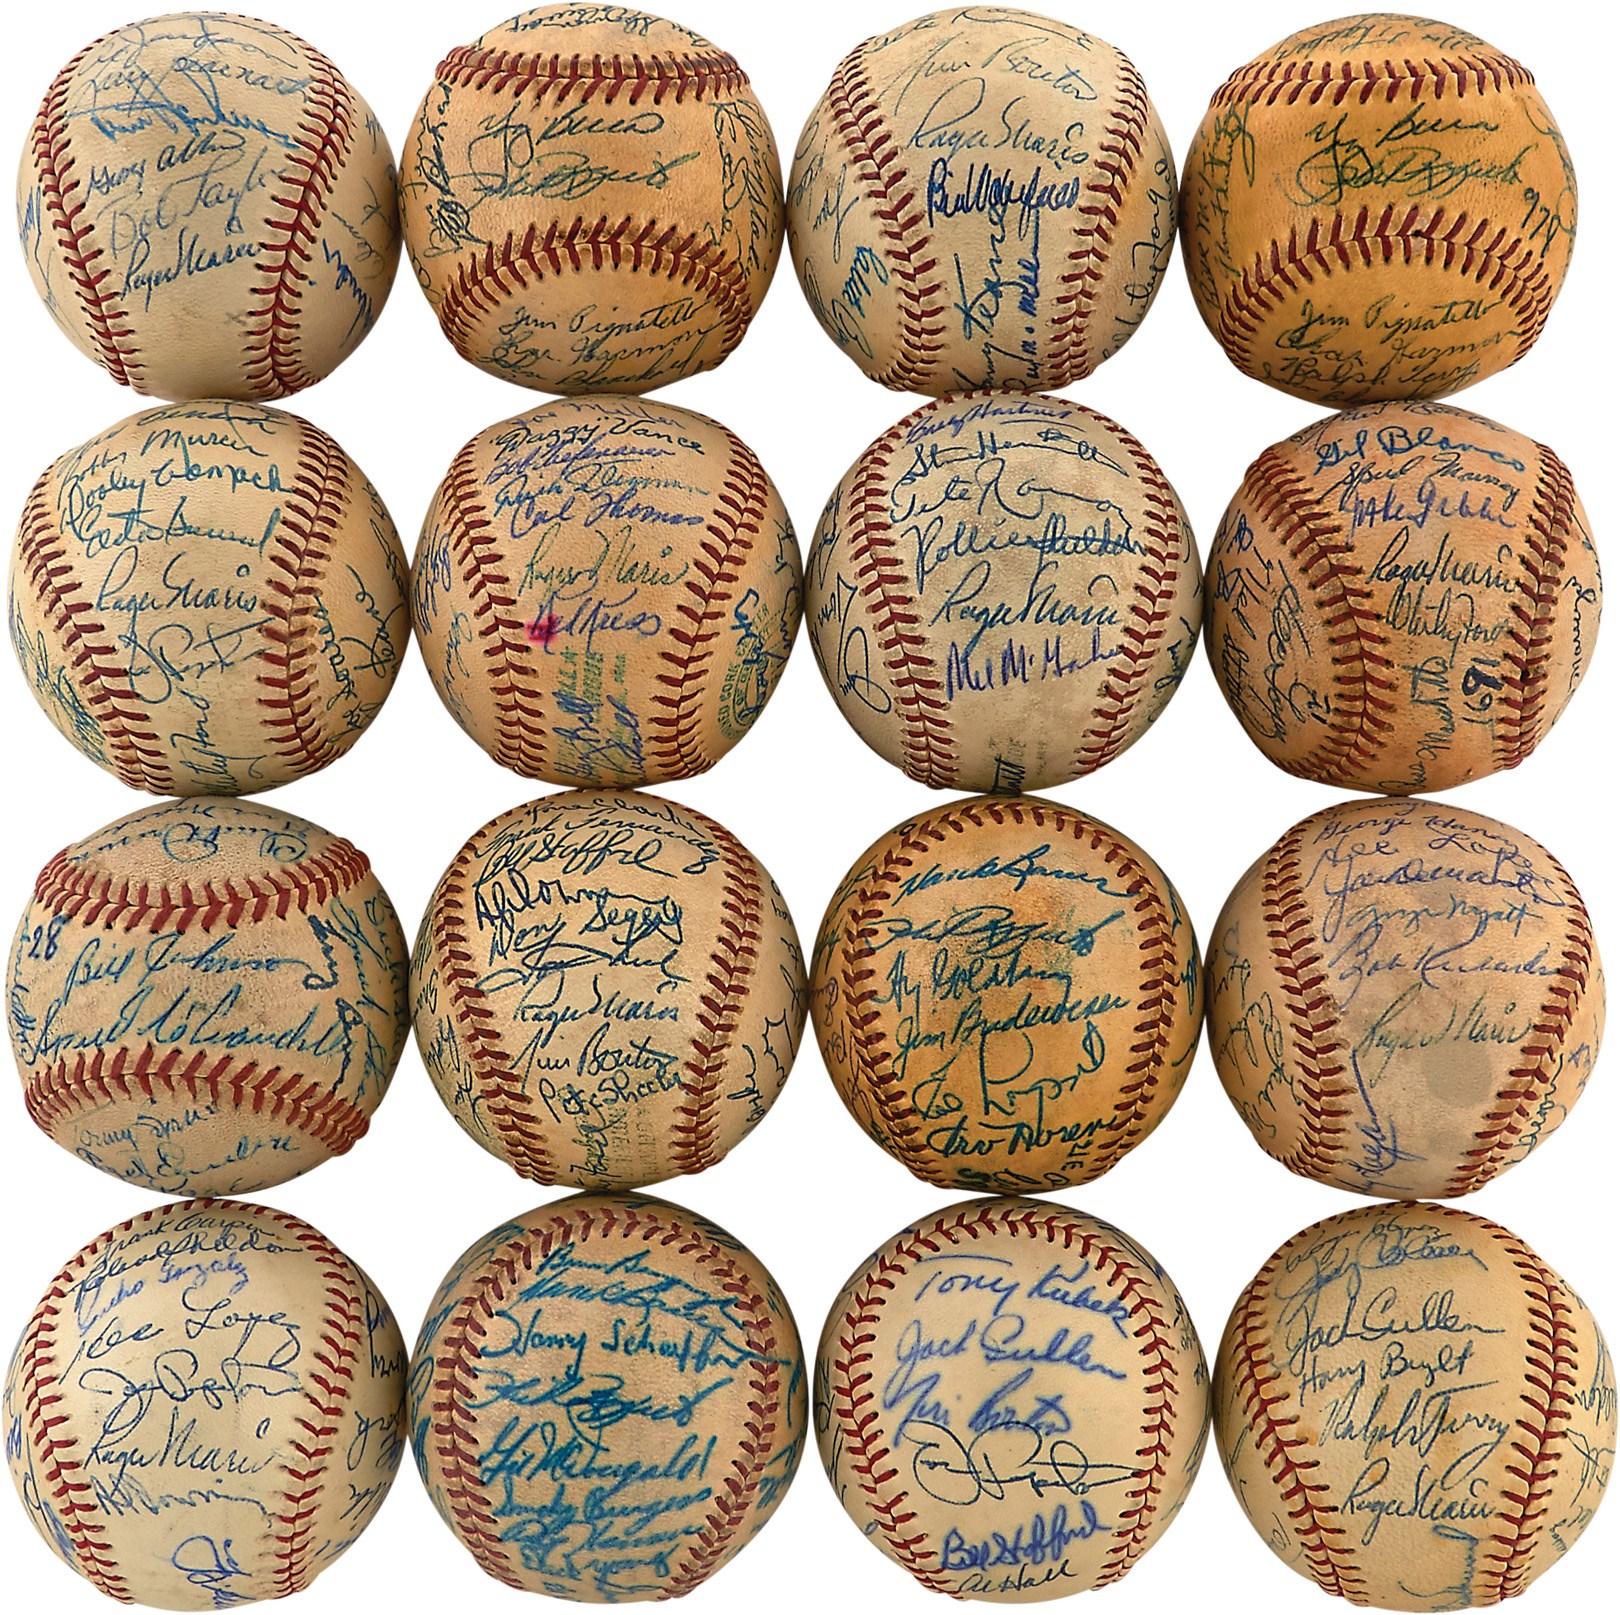 The John O'connor Signed Baseball Collection - Incredible 1947-67 New York Yankees Team-Signed Baseballs